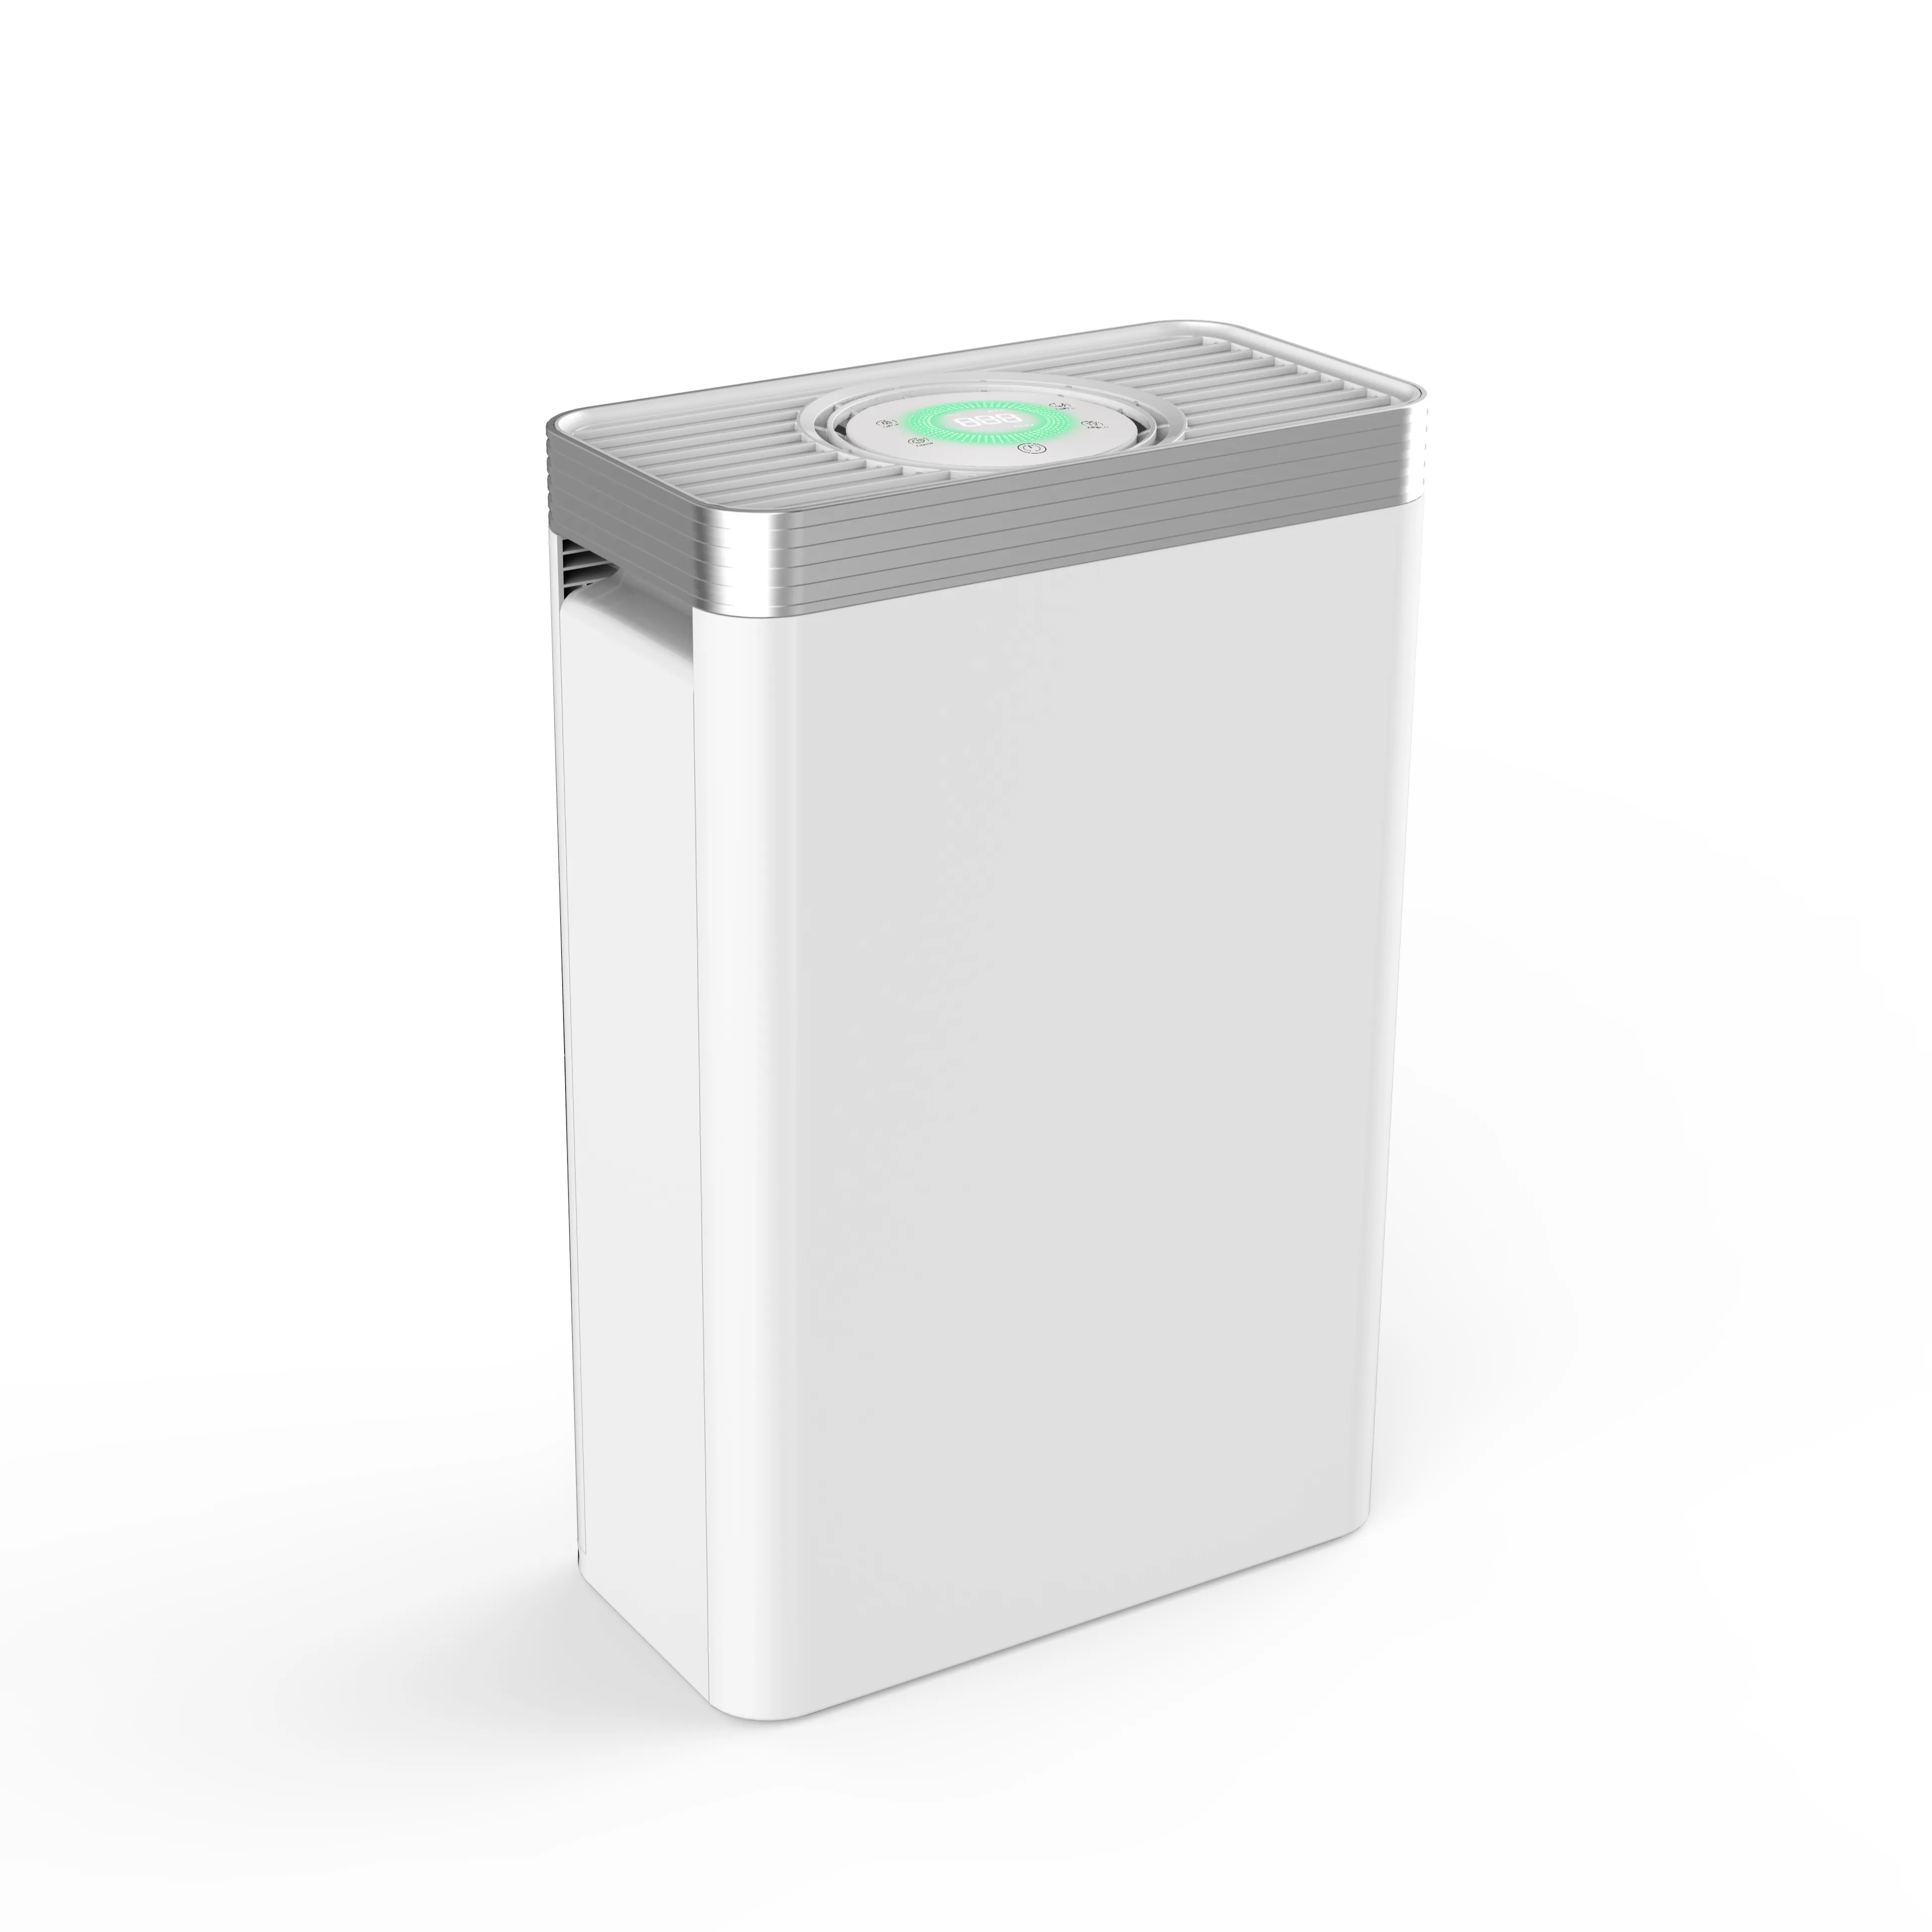 Powerful Portable Air Purifier No Noise Sleep Mode Air Purifier Home Portable Air Cleaner With WiFi